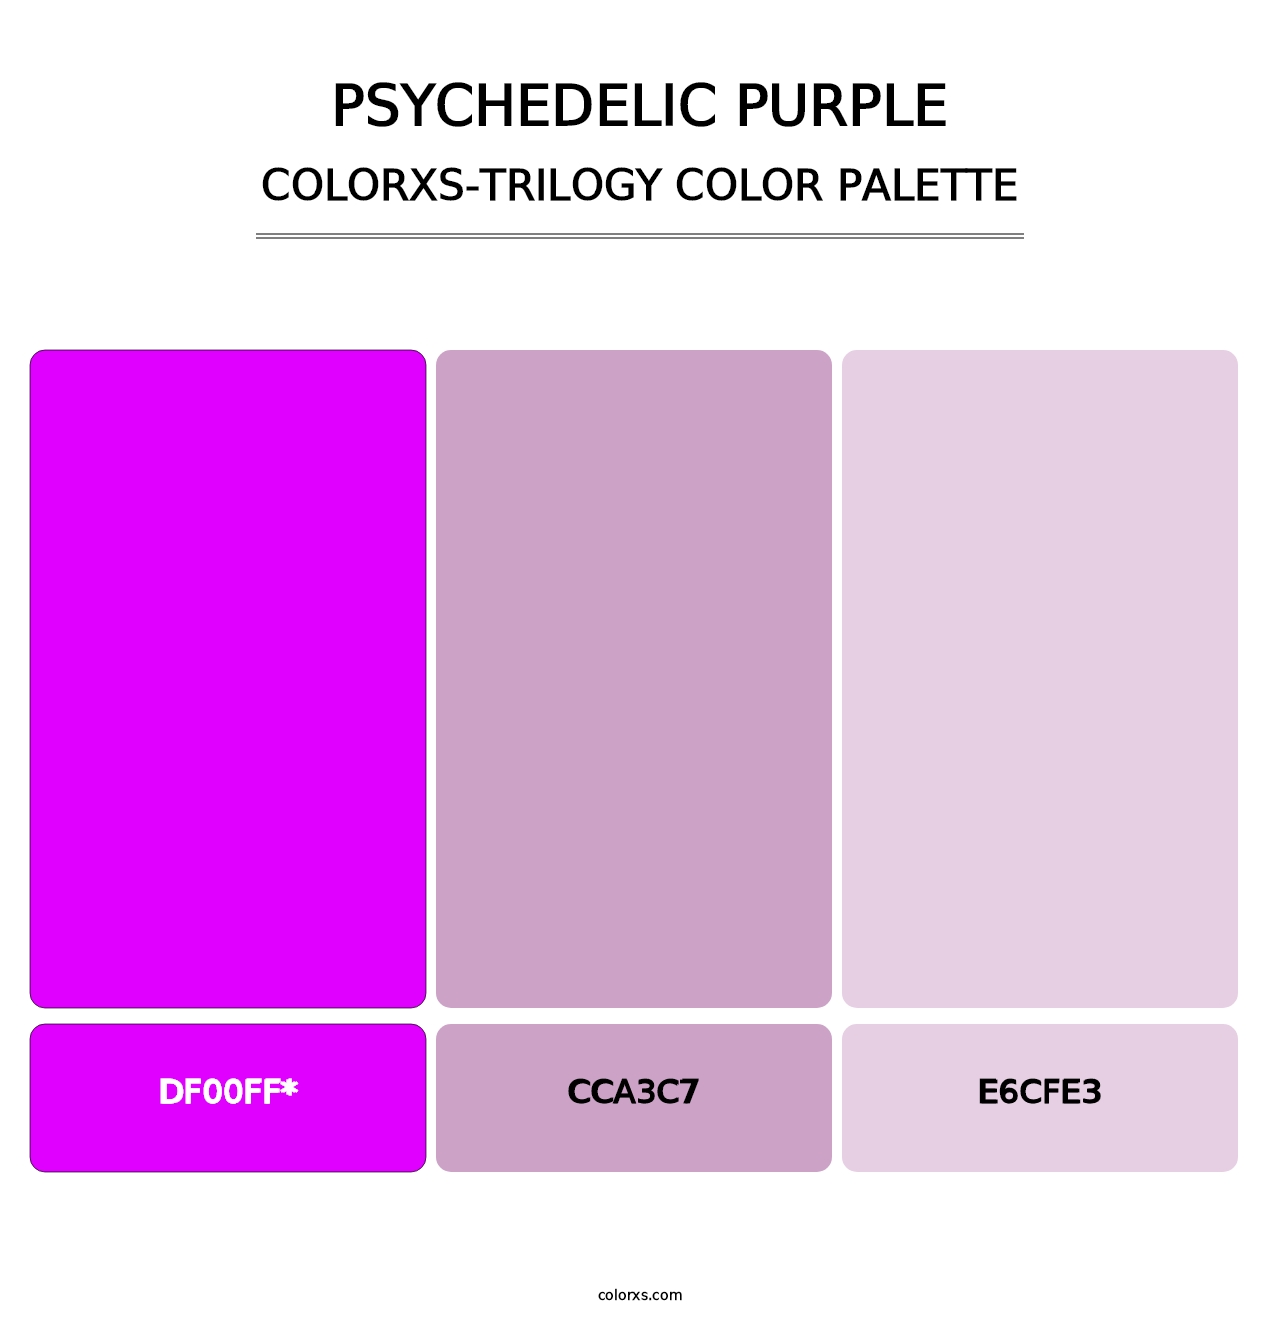 Psychedelic Purple - Colorxs Trilogy Palette